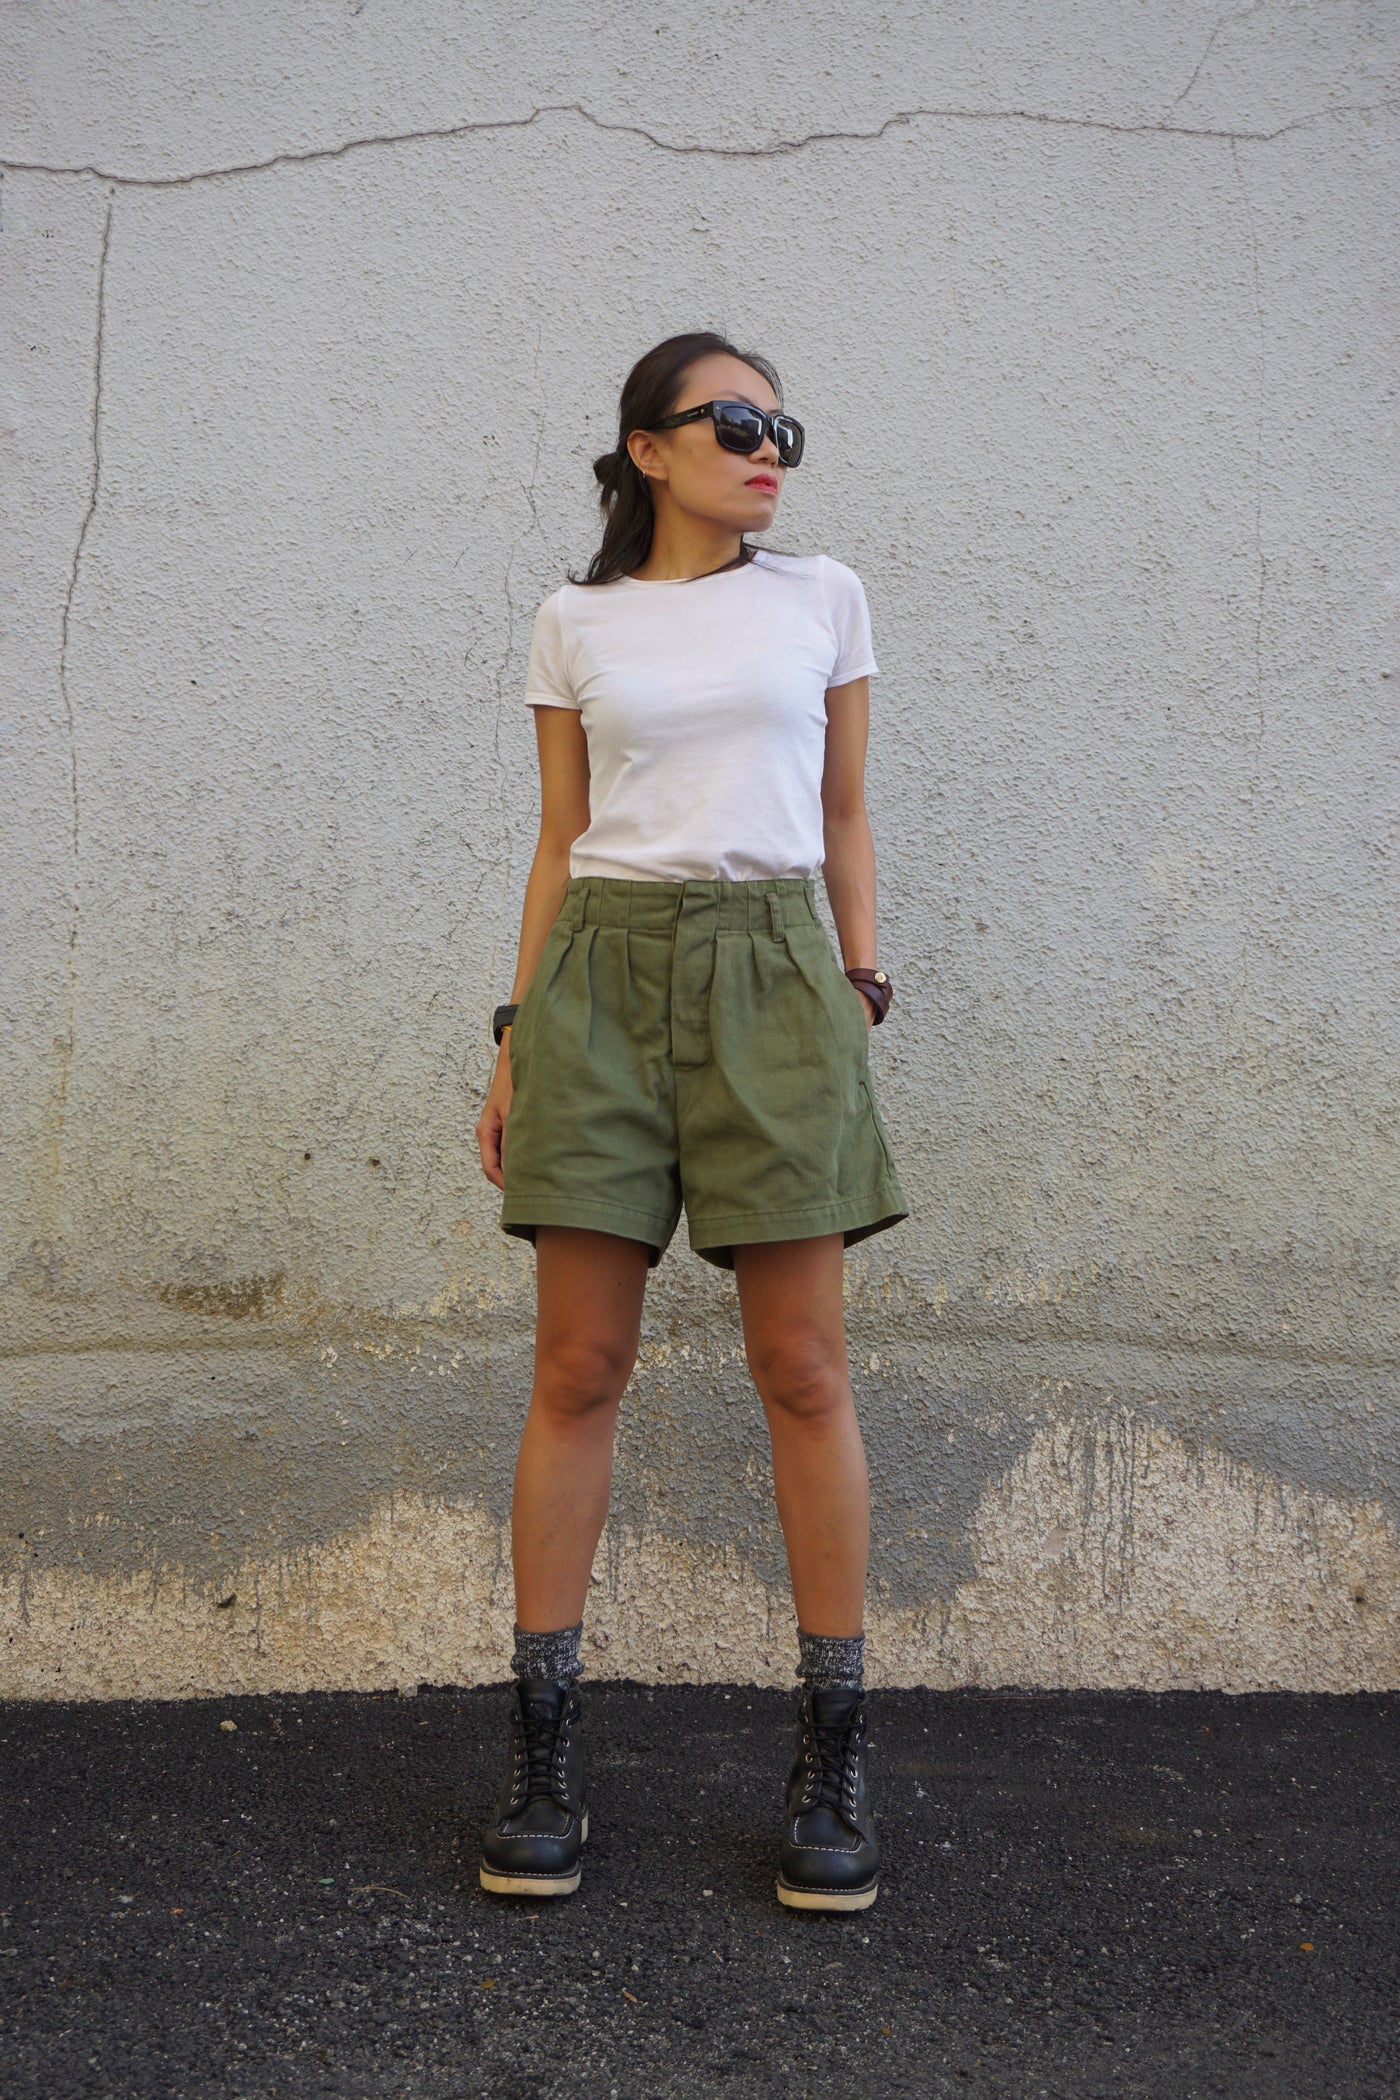 Gurkha Style Shorts (SOLD OUT)